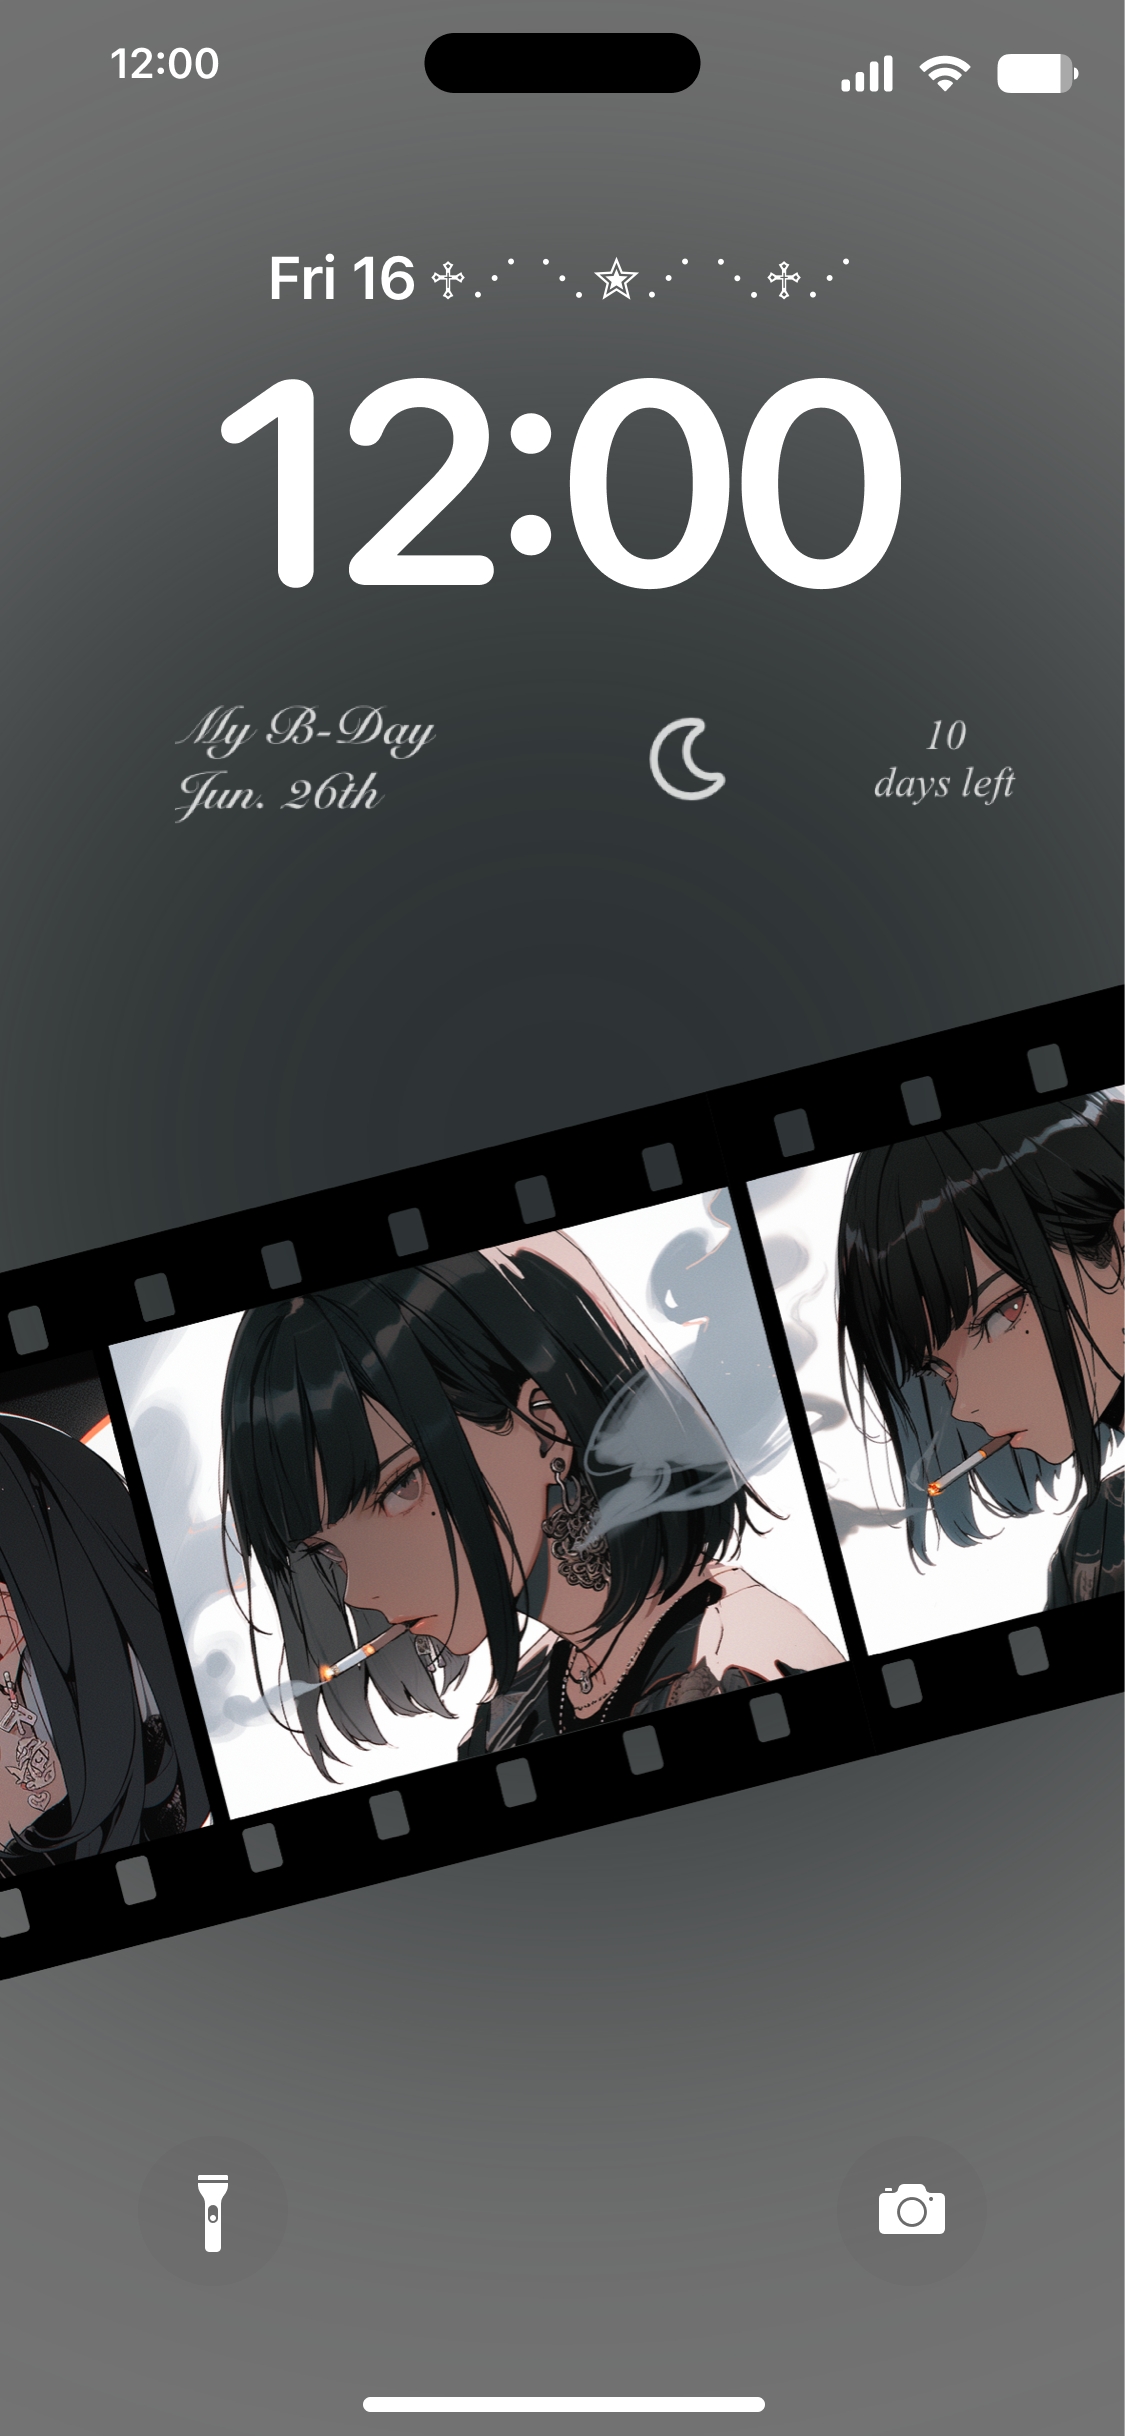 39+] Aesthetic Anime HD Wallpapers - WallpaperSafari